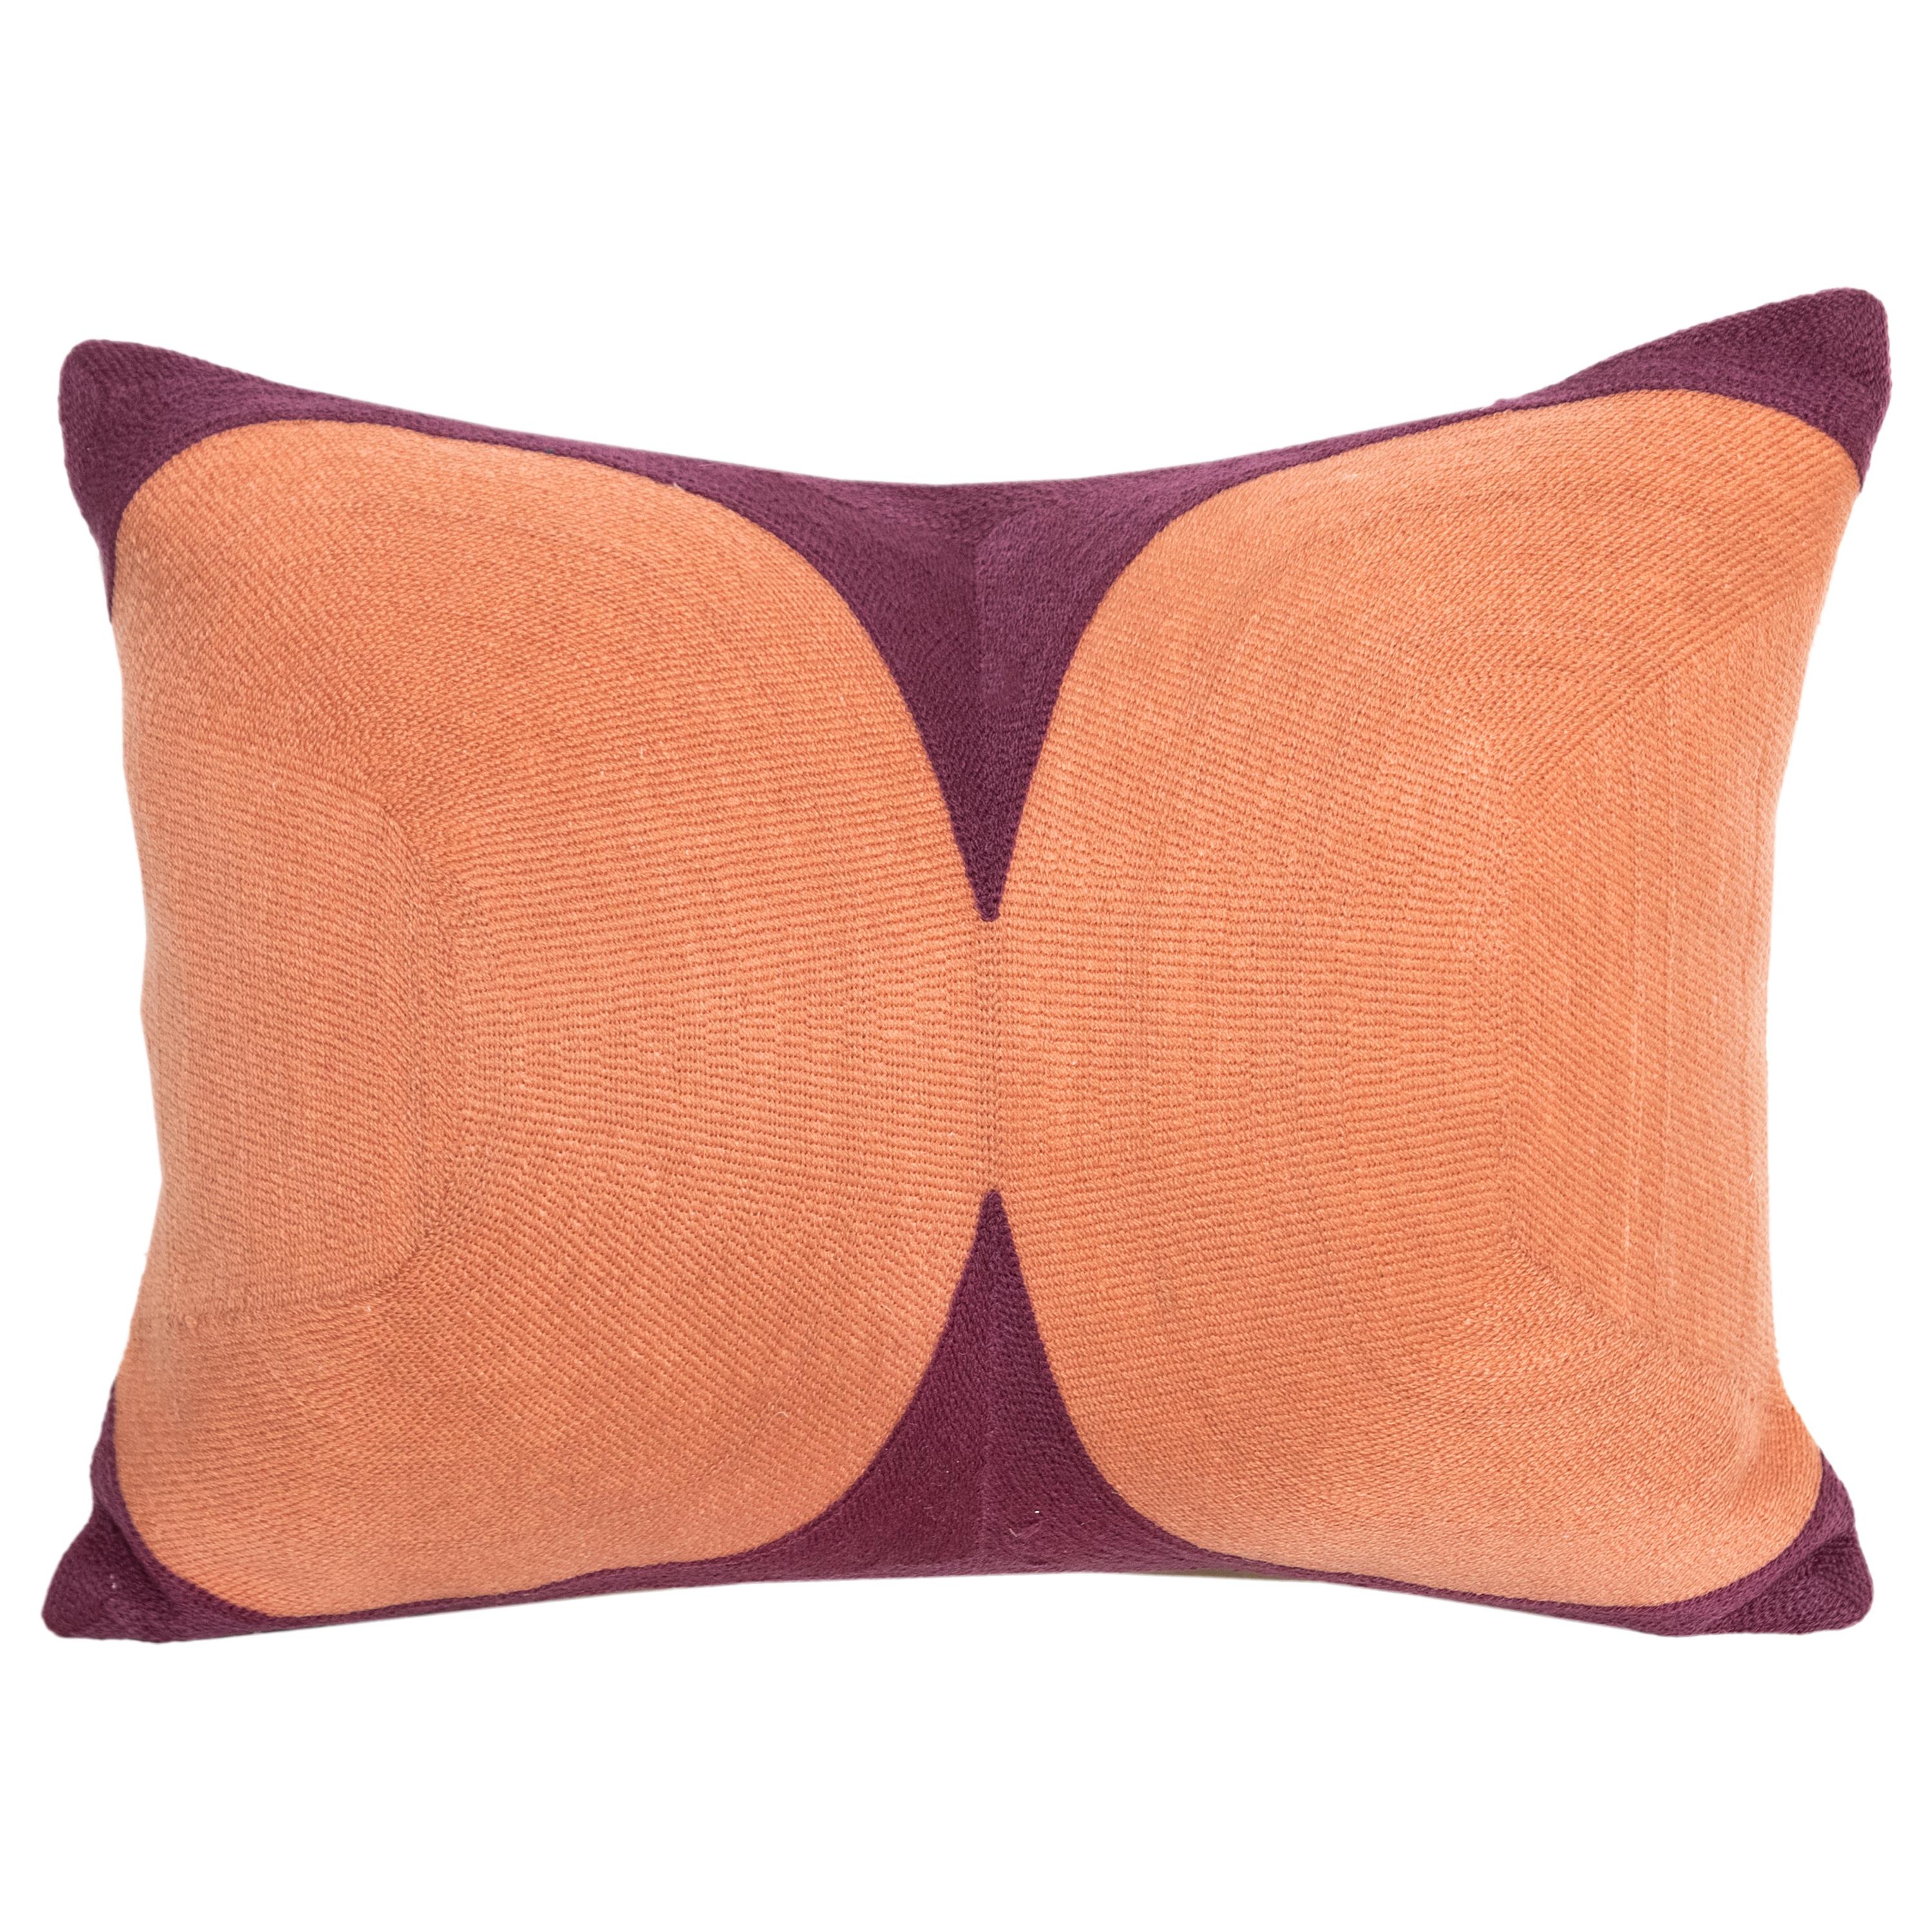 Contemporary Modern Kilombo Home Embroidery Pillow Cushion Cotton Pulple Salmon